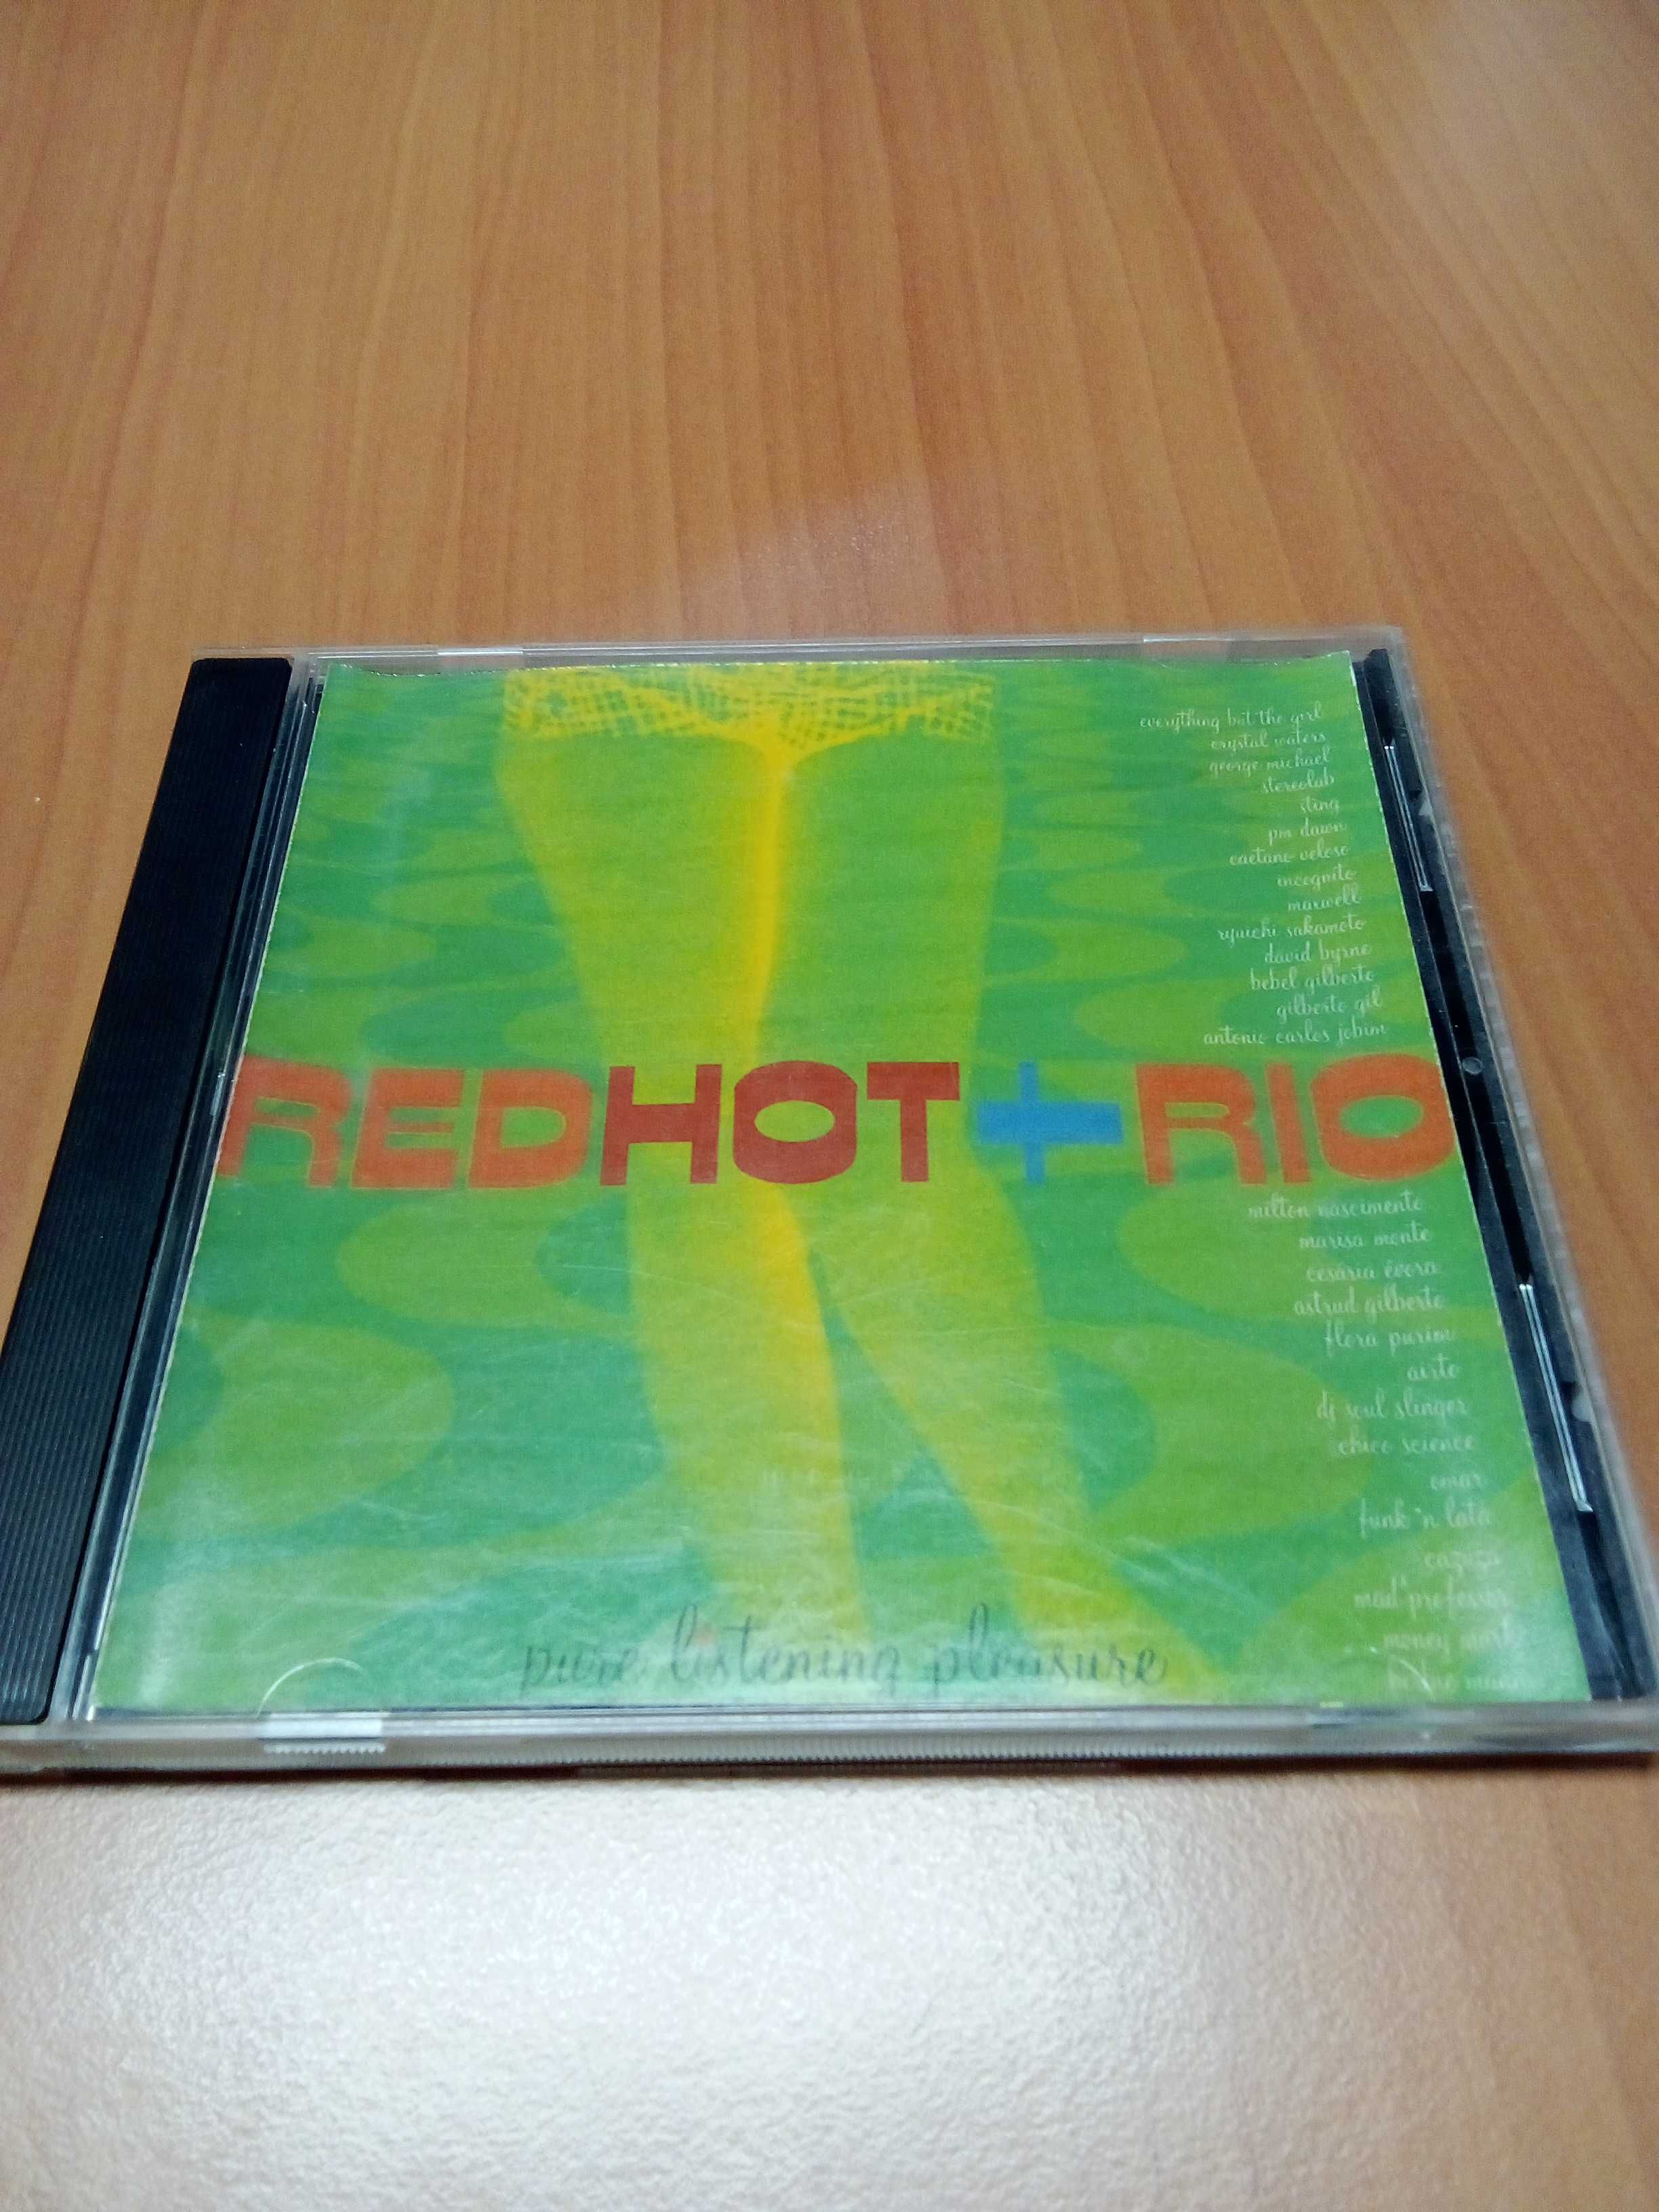 Red Hot + Rio: Pure Listening Pleasure